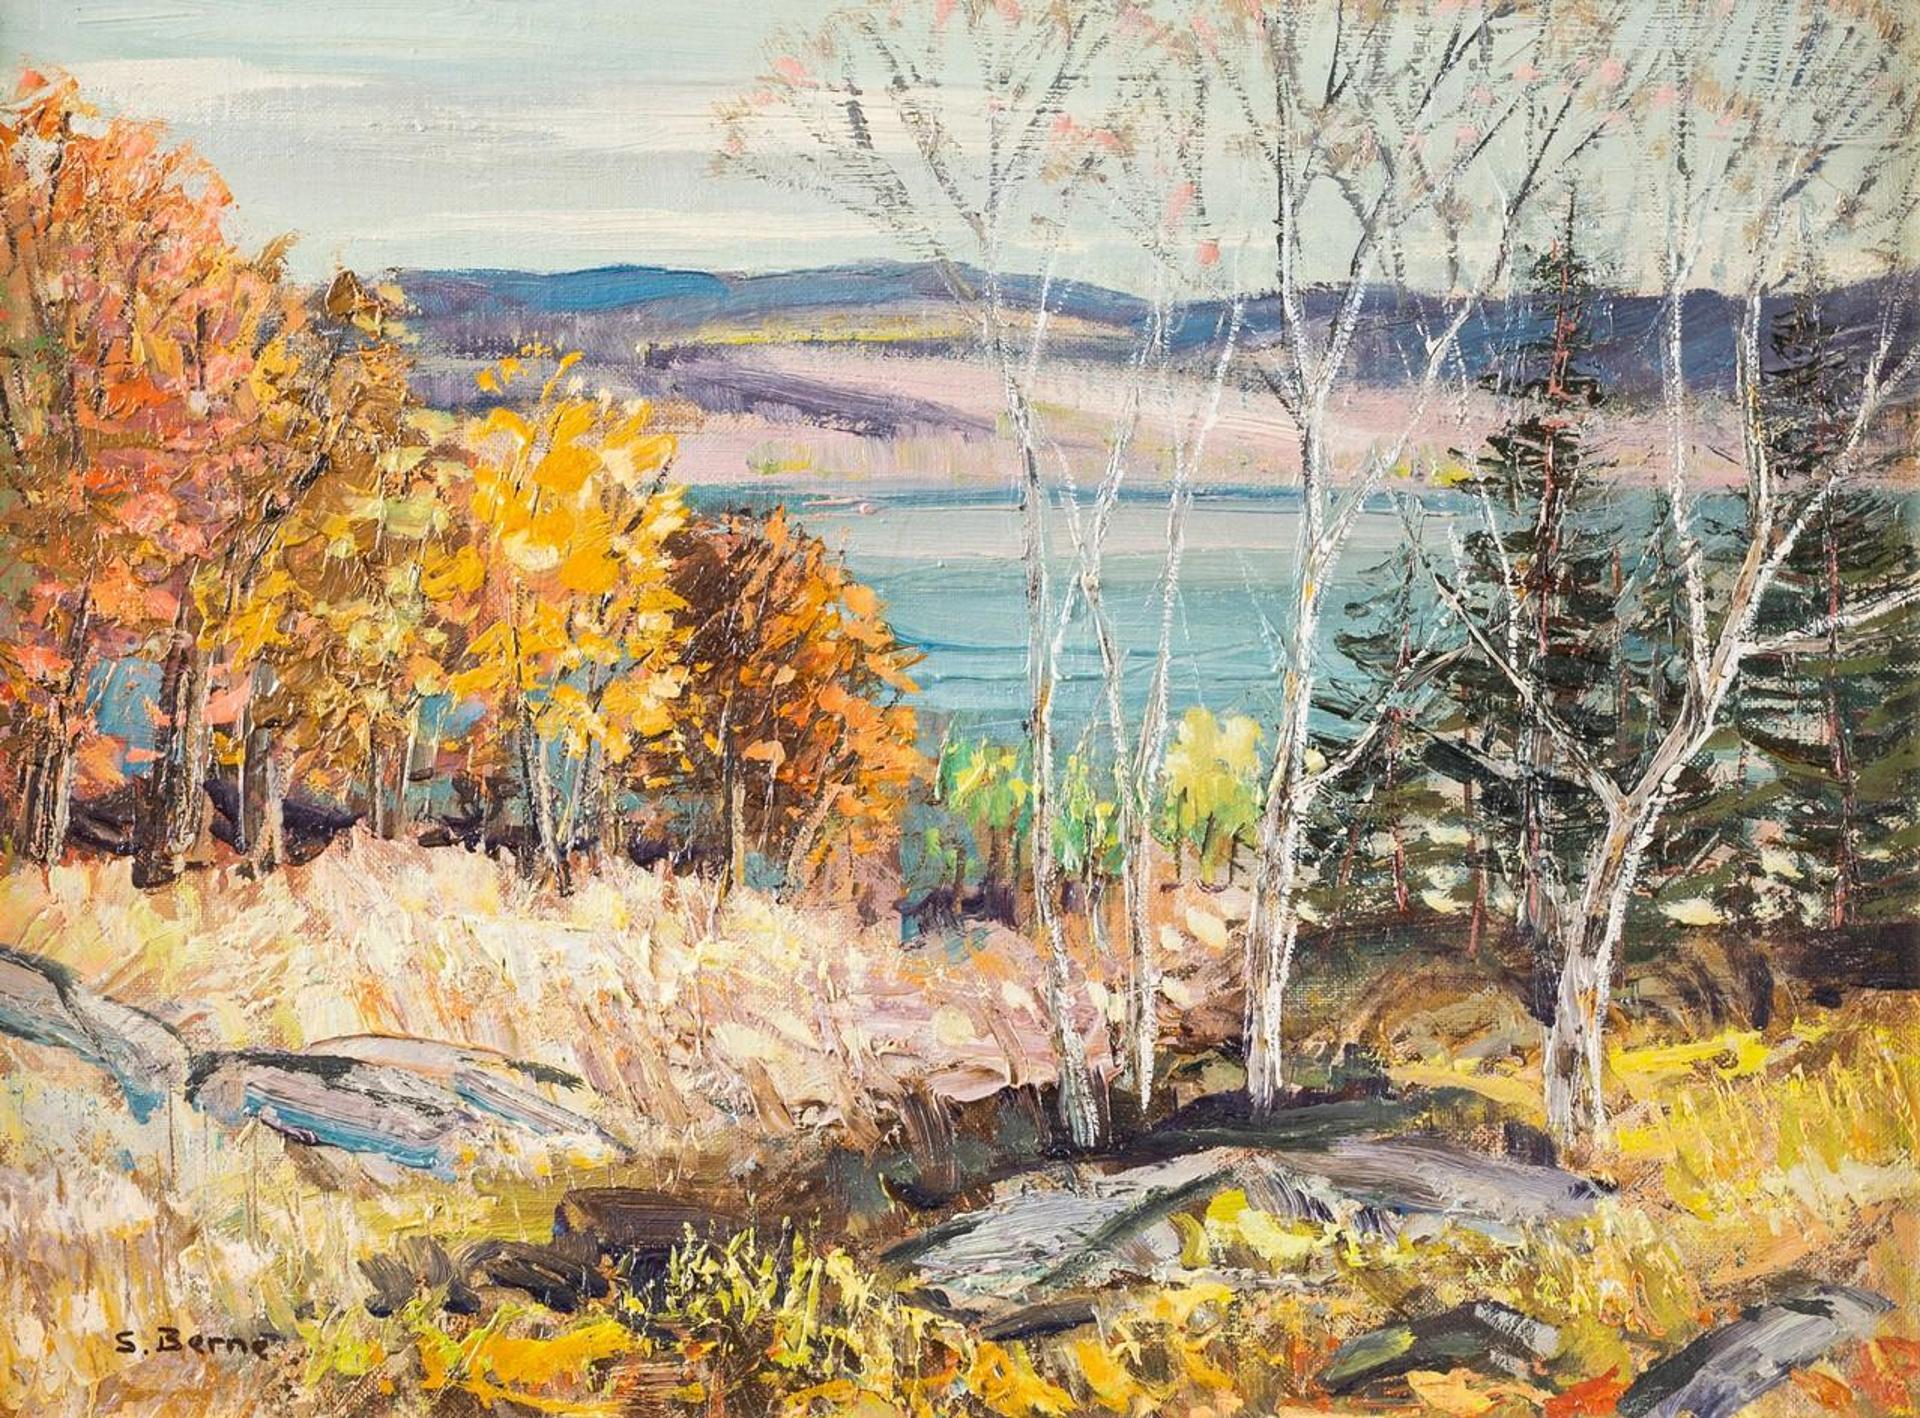 Sydney Martin Berne (1921-2013) - Fall Landscape with Lake